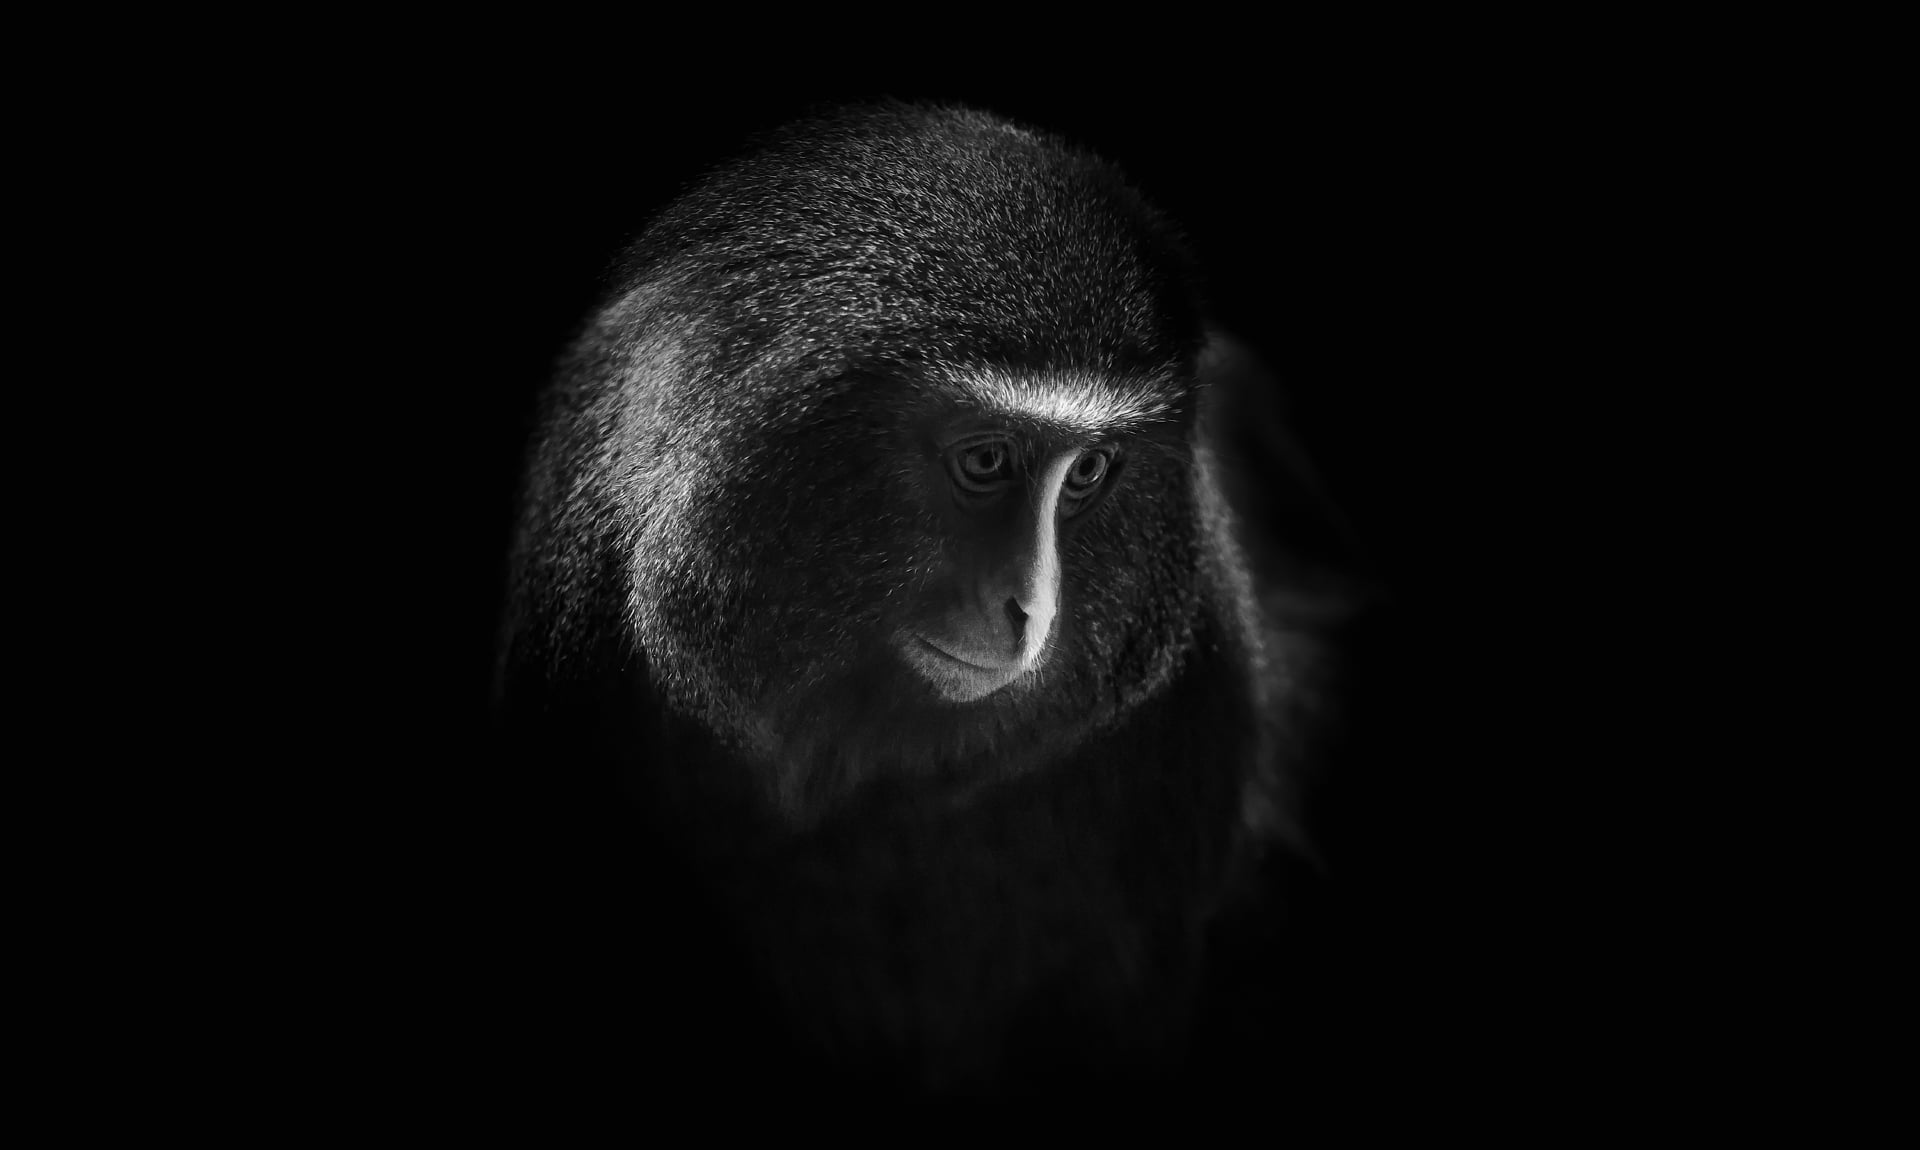 Hamlyns monkey at 2048 x 2048 iPad size wallpapers HD quality